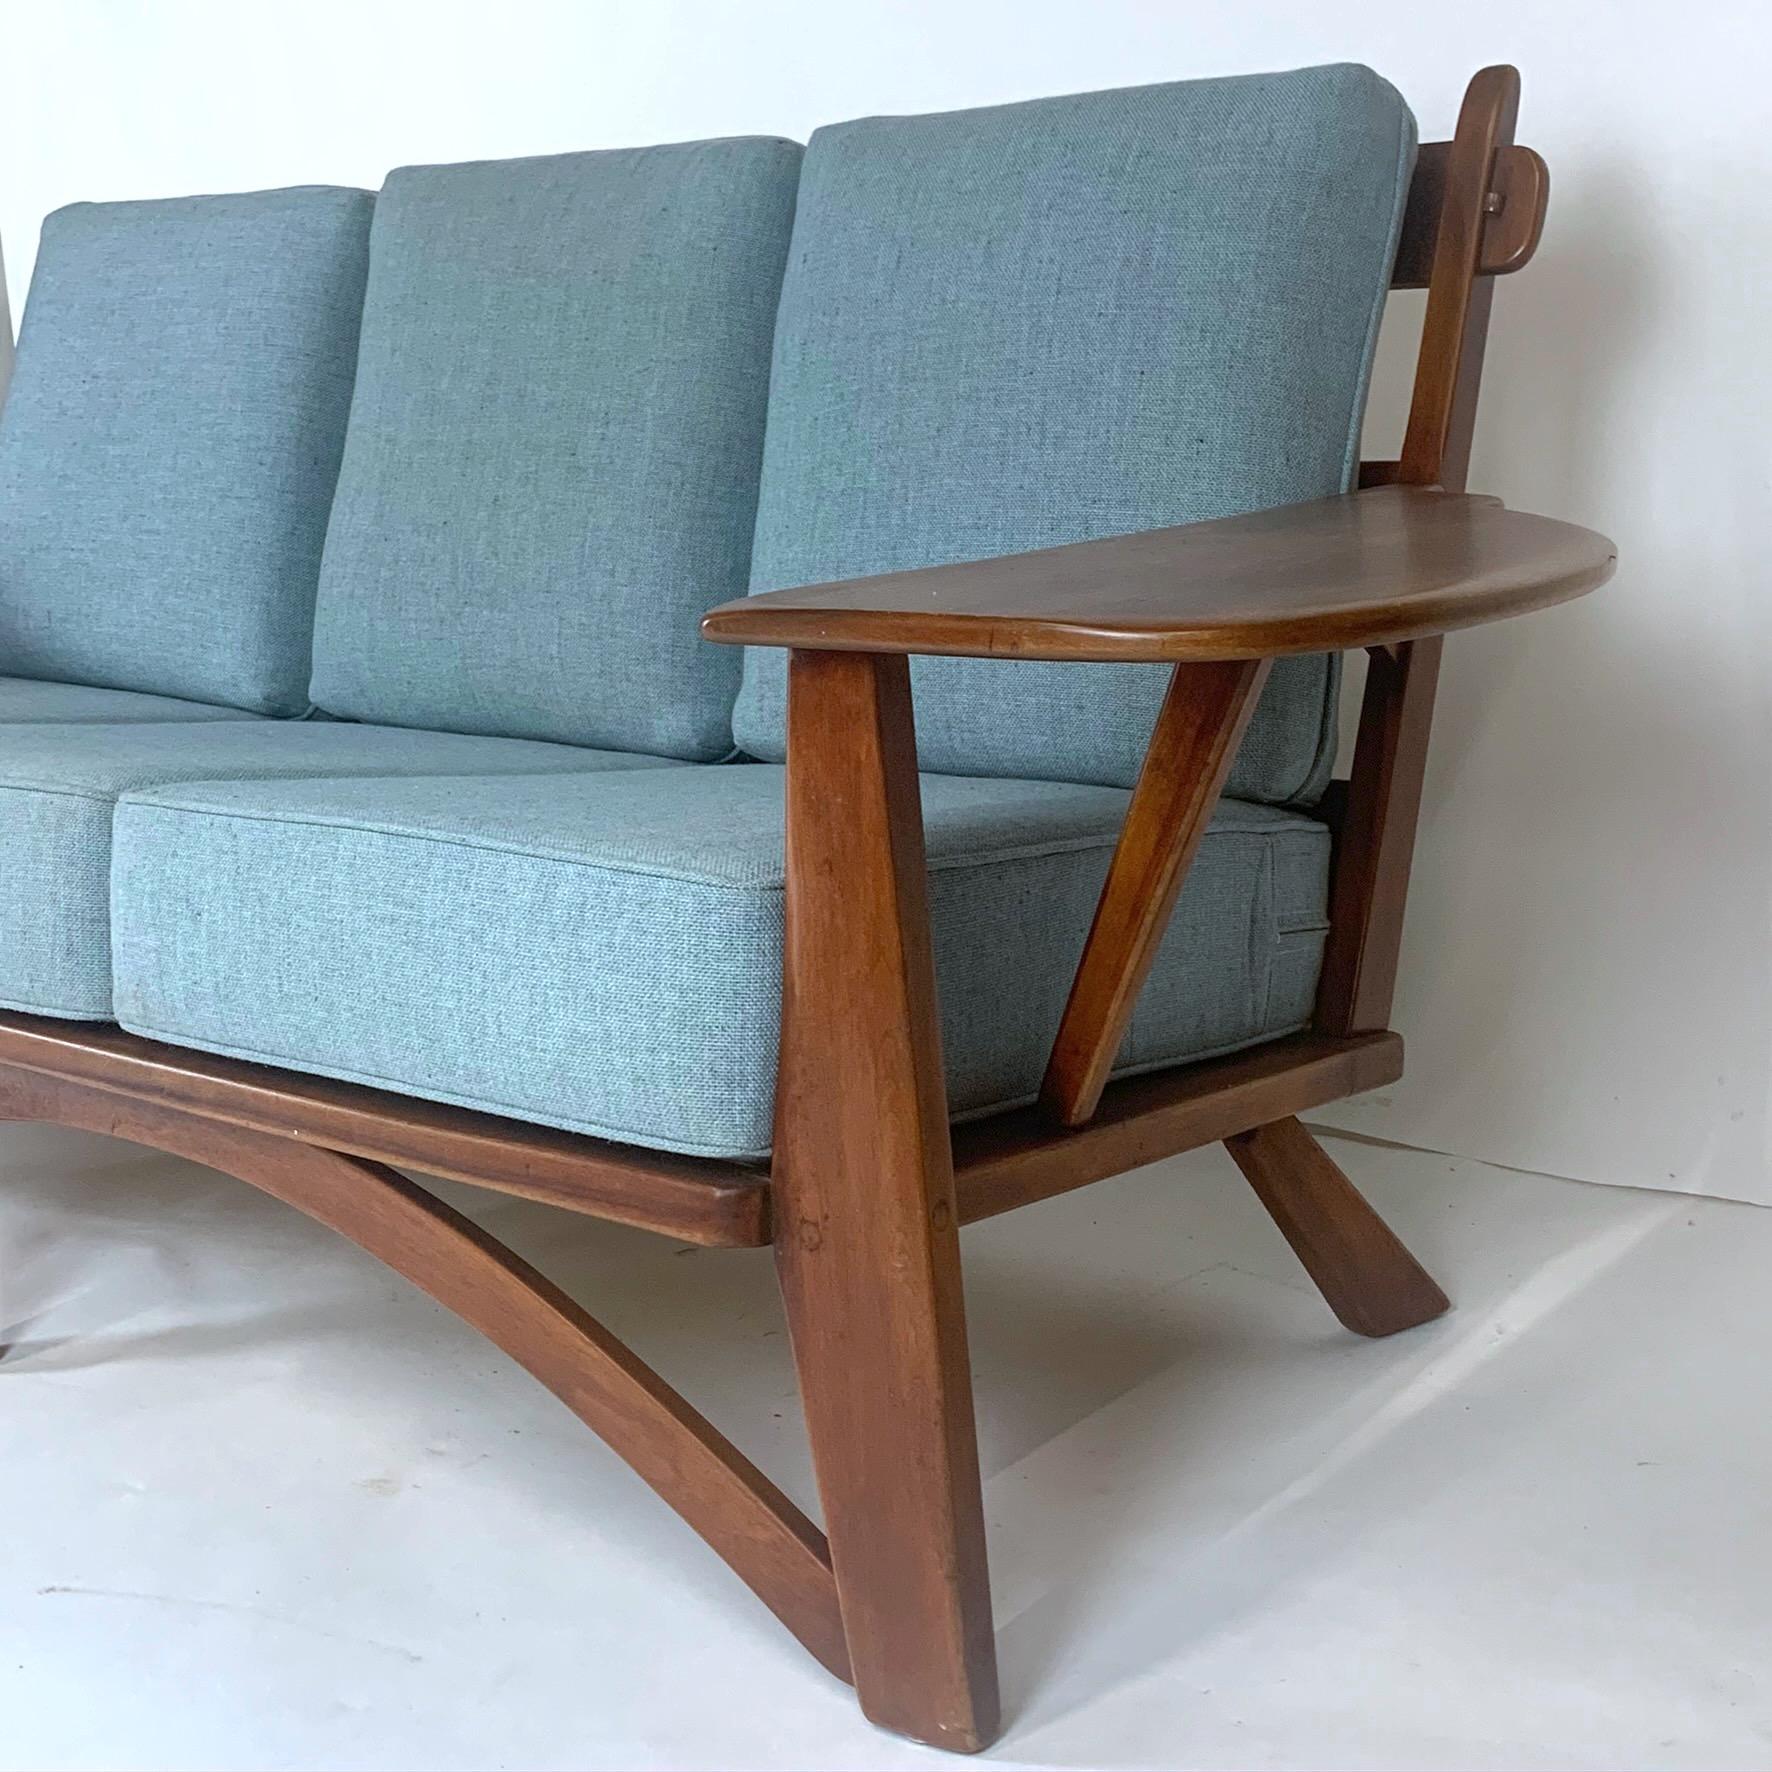 Impressive 1930s Cushman Maple Paddle Arm Sofa Designed by William DeVries 1